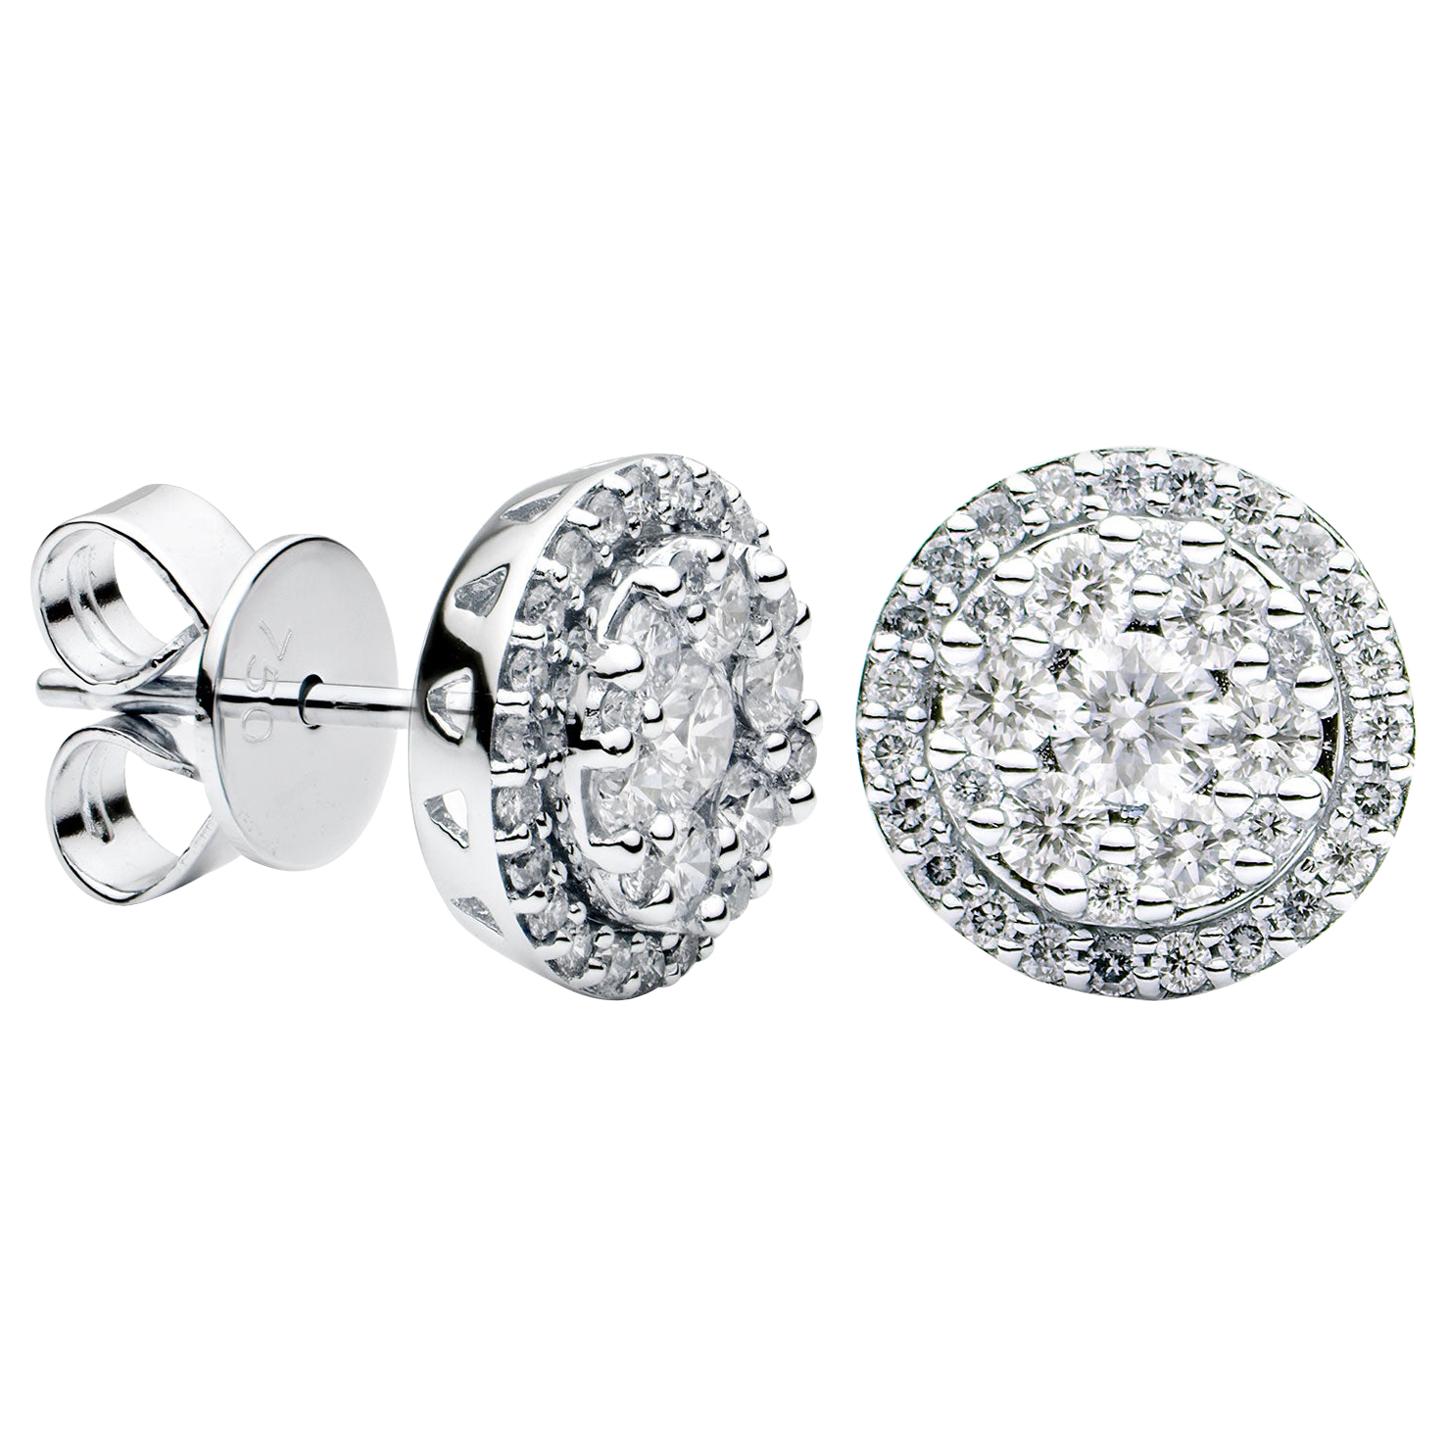 Round Halo Diamond Earrings